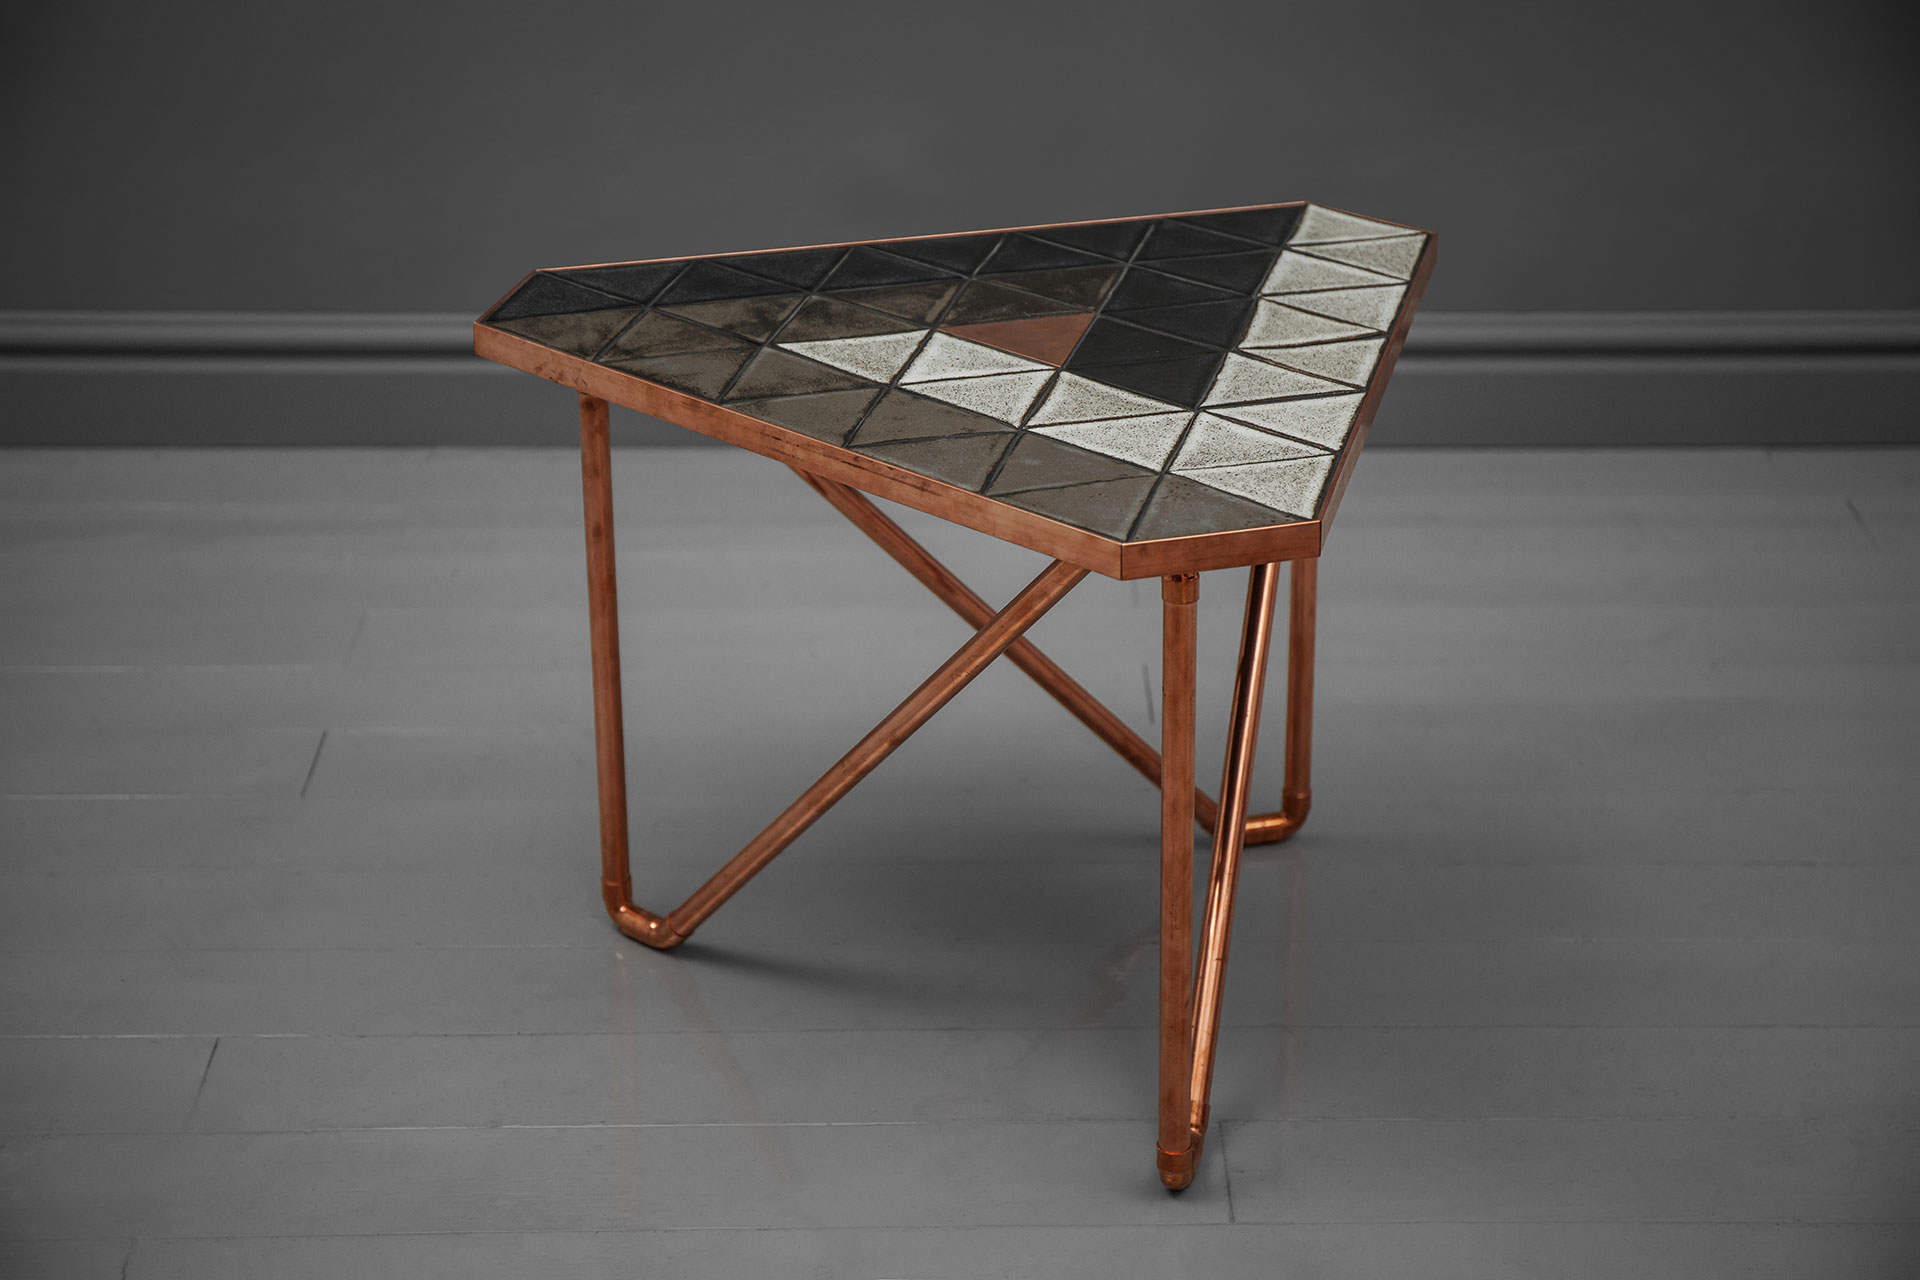 Conceptual design coffee table with ceramic 3D illusion top